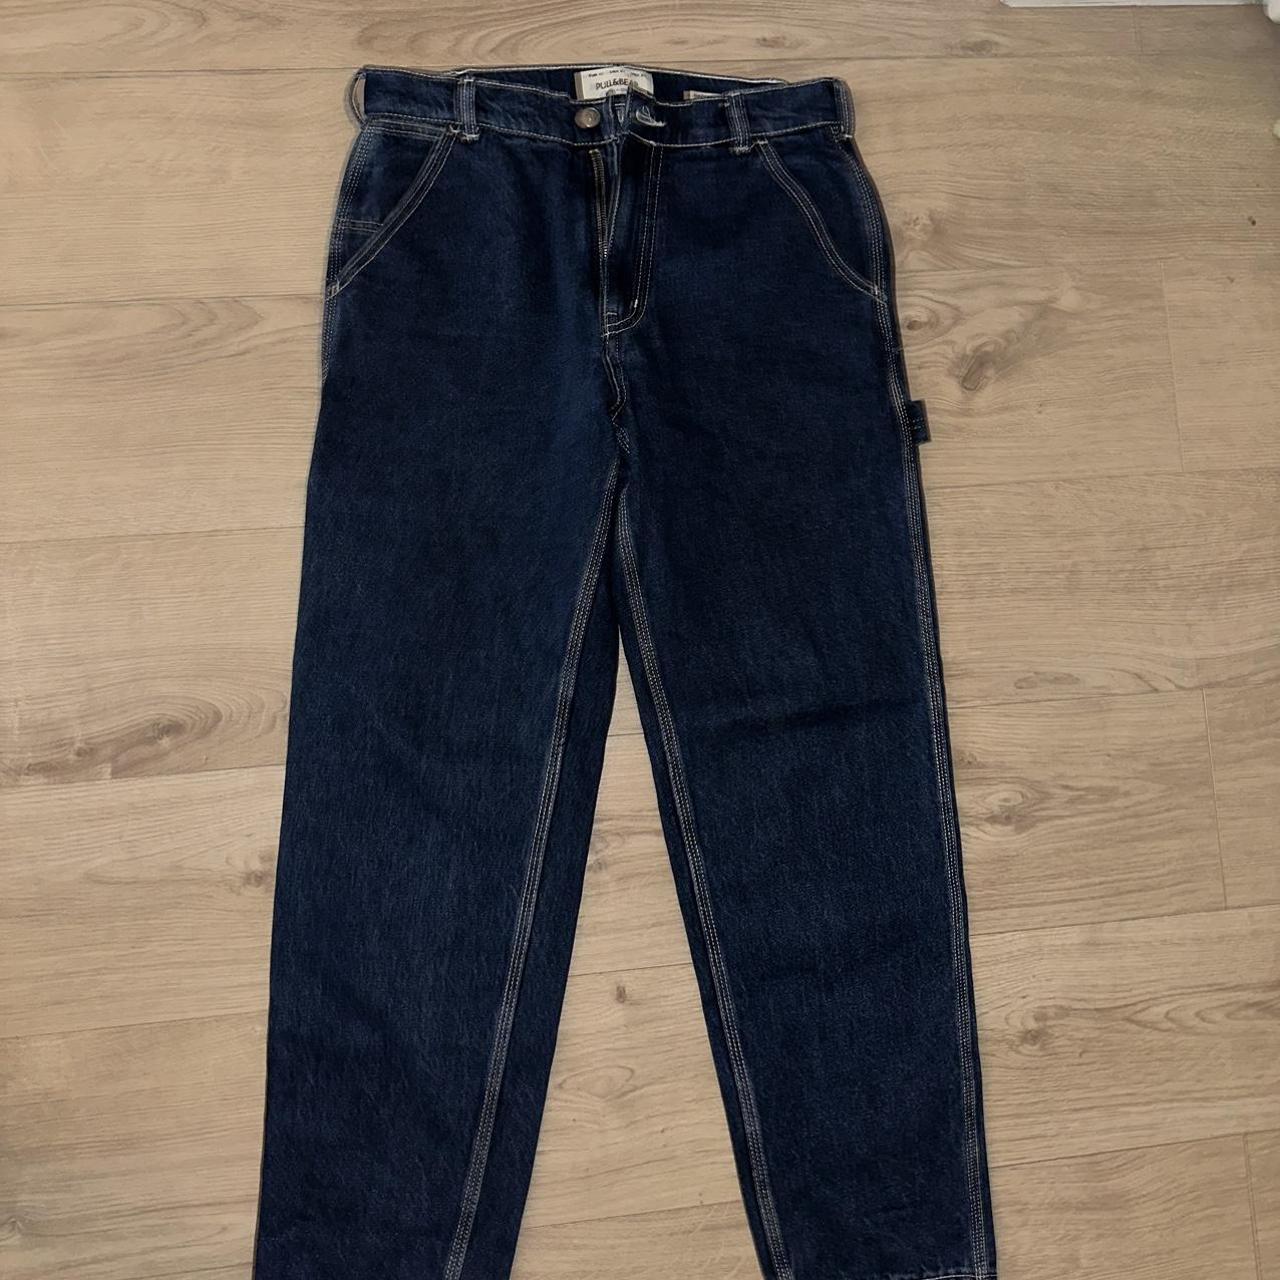 baggy jeans size euro 40 - Depop